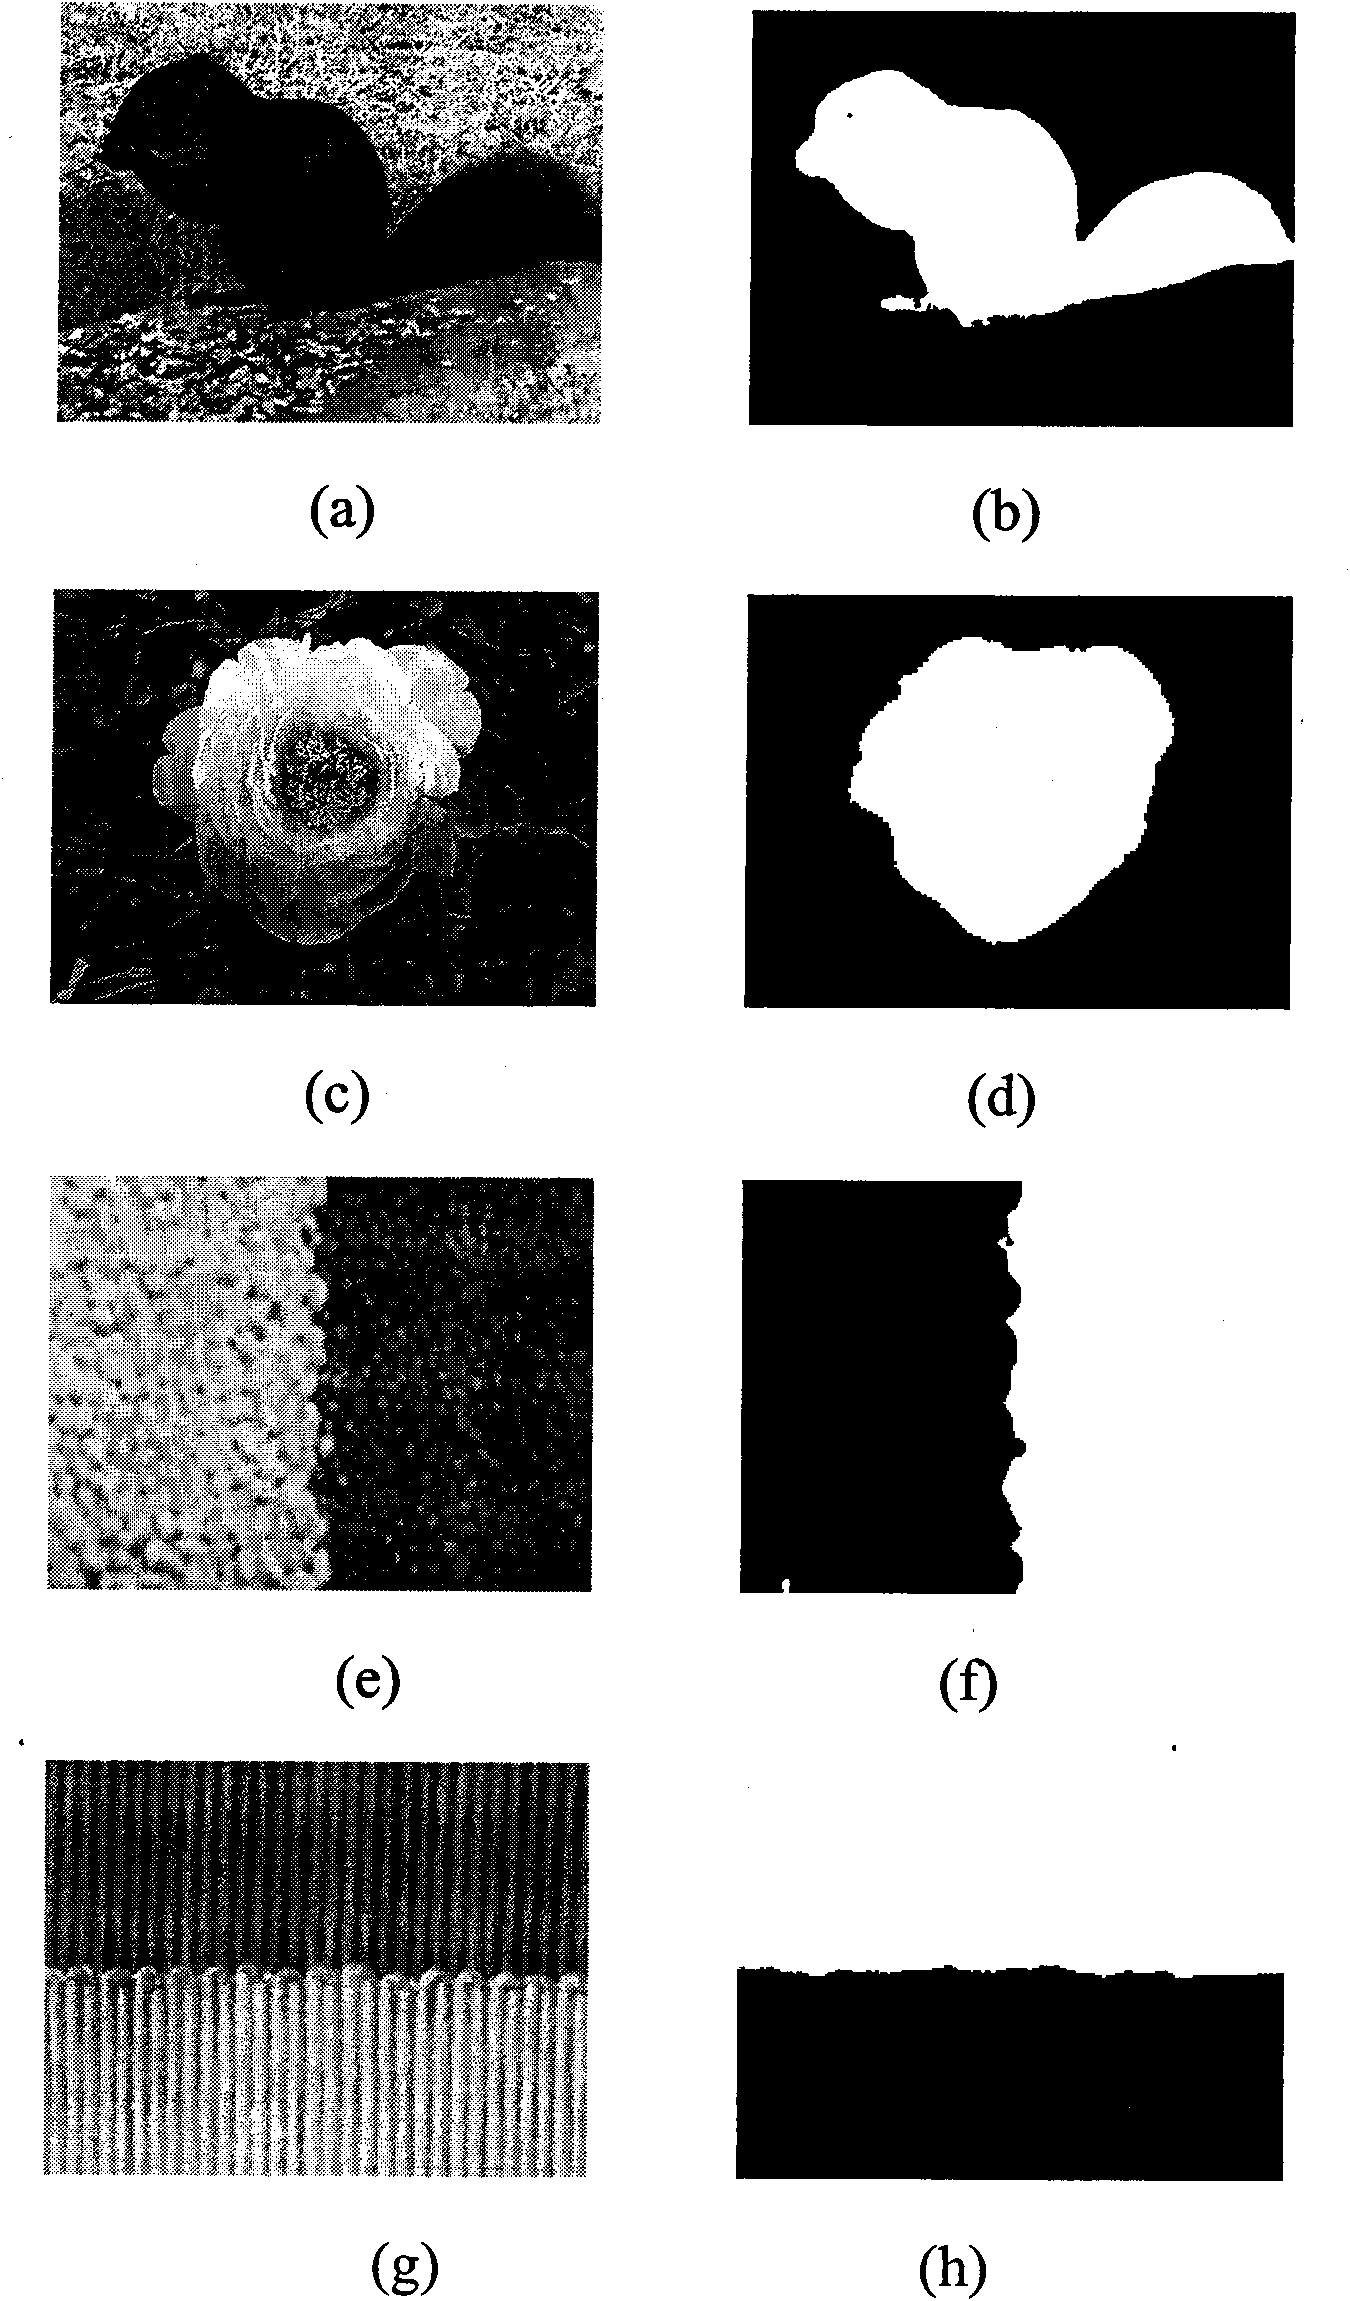 Method for dividing level set image based on characteristics of neighborhood probability density function